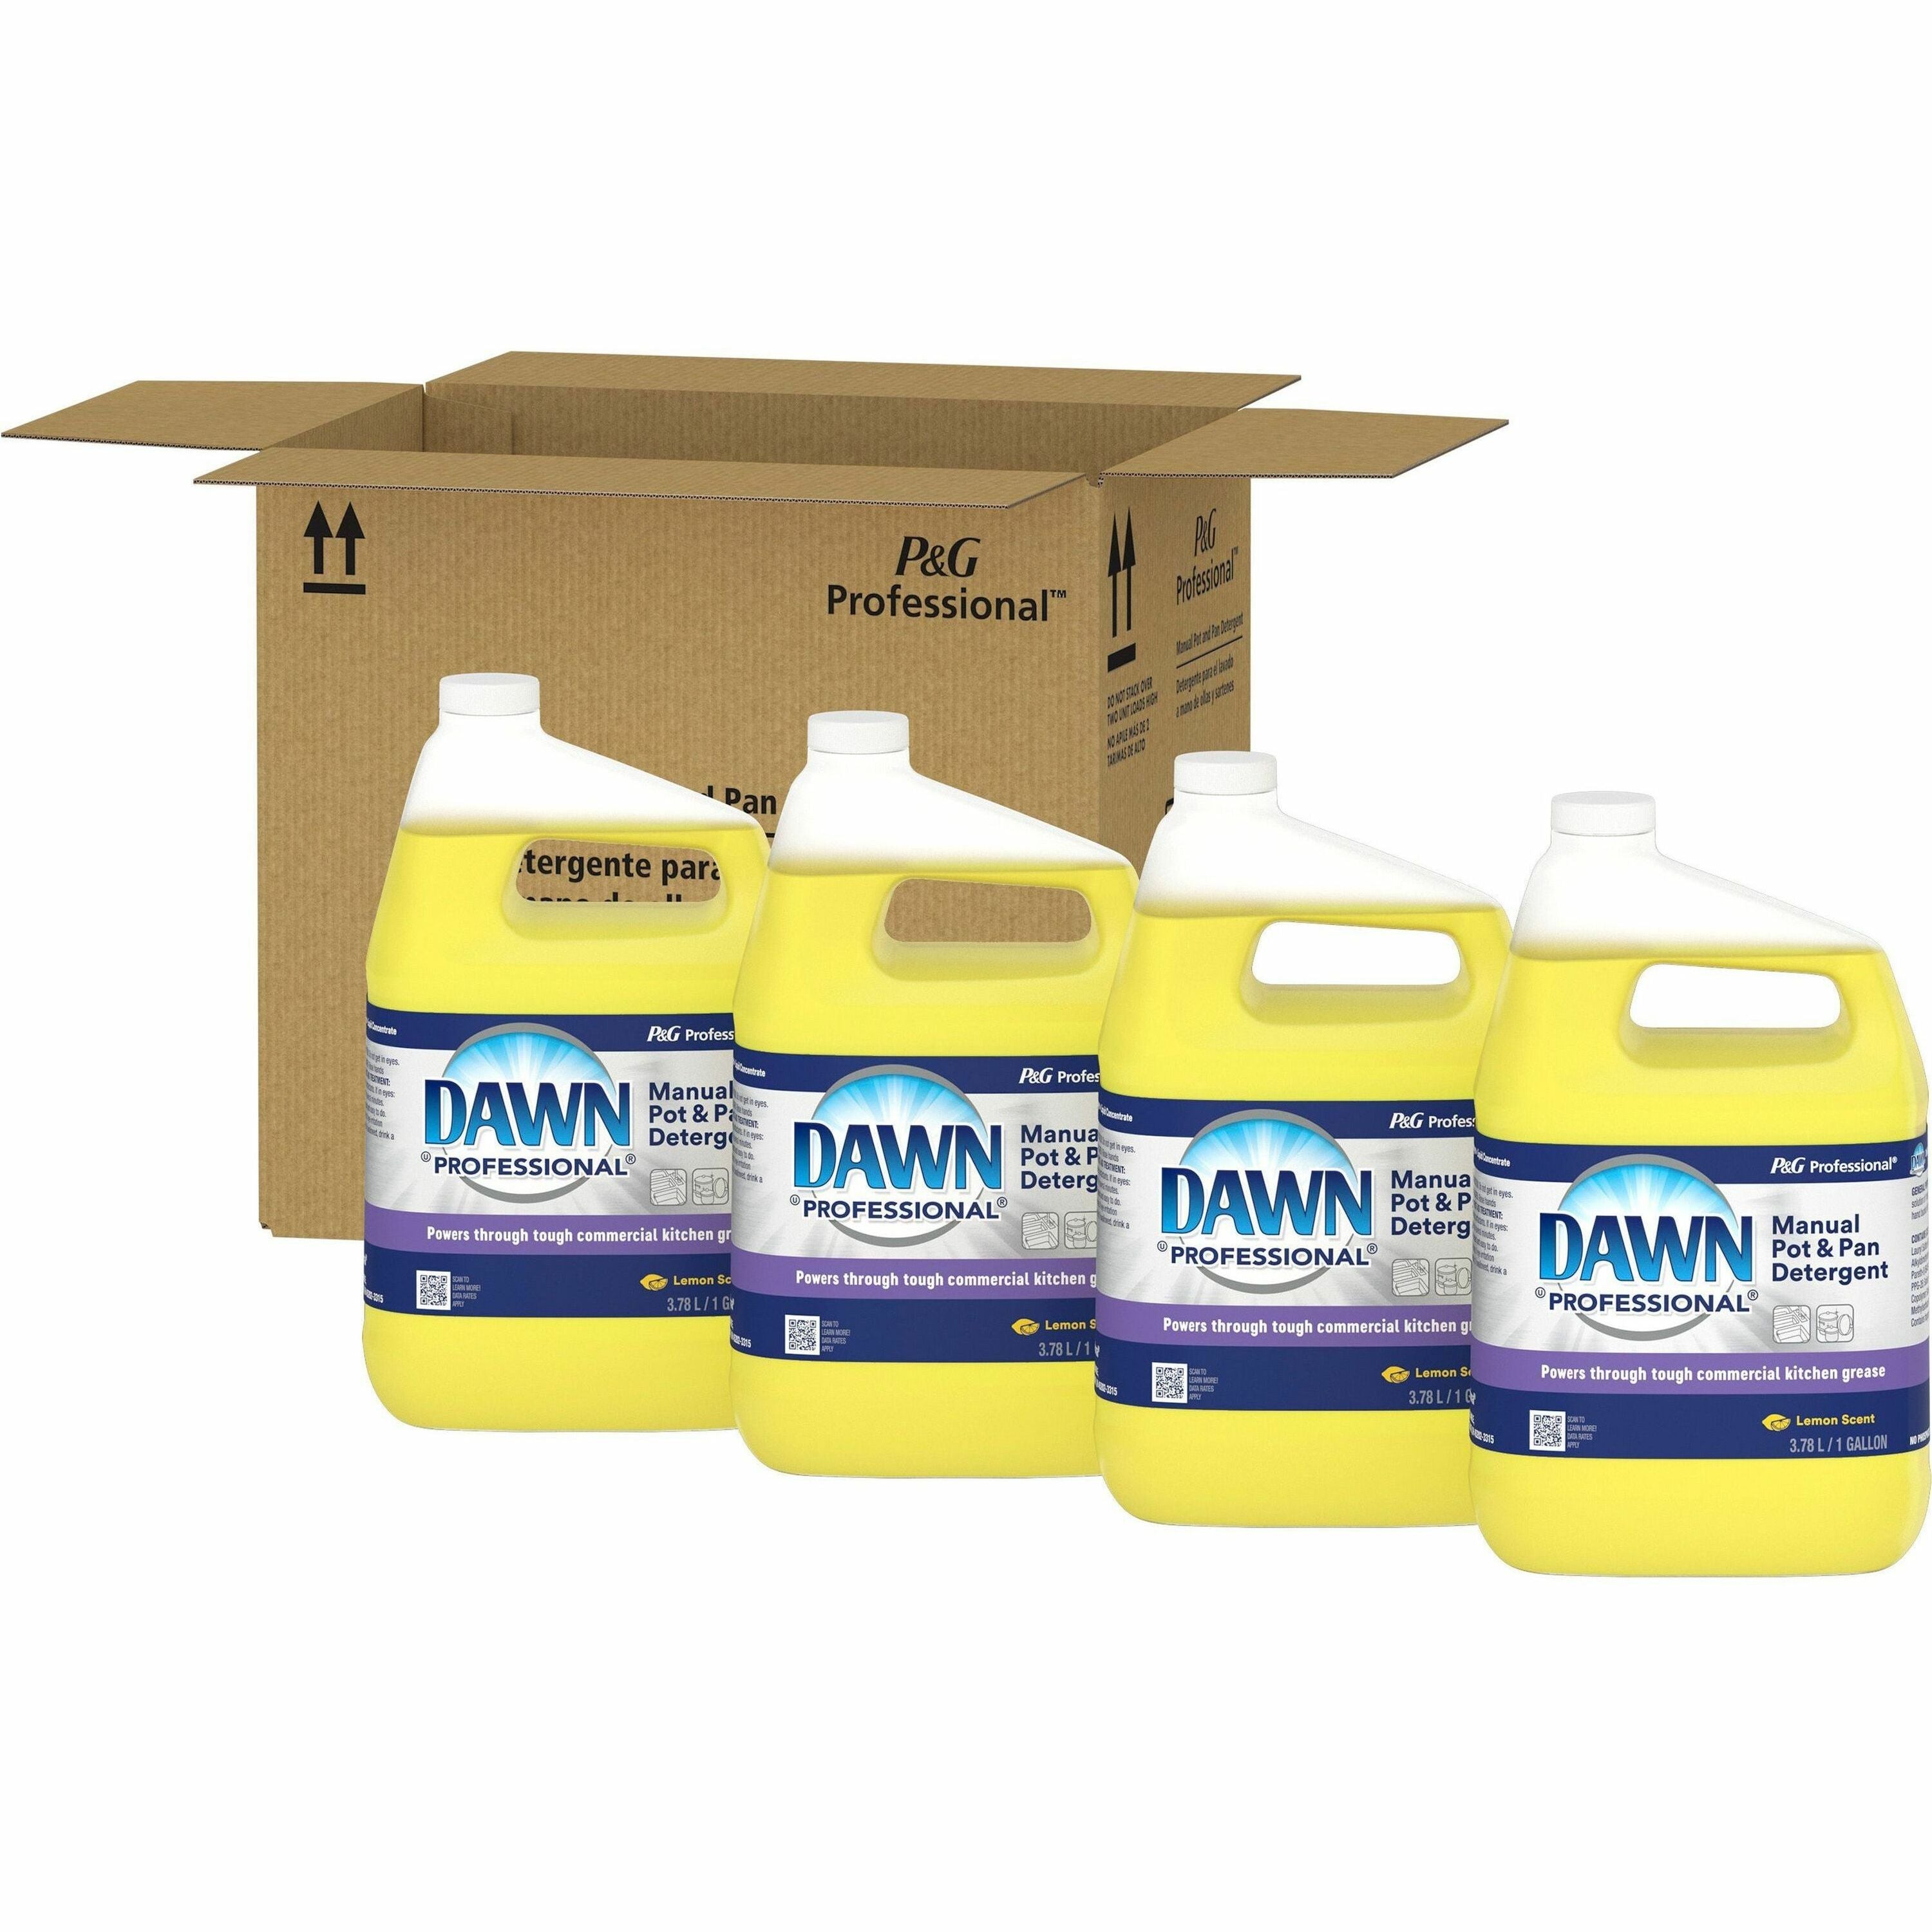 dawn-manual-pot-pan-detergent-128-fl-oz-4-quart-lemon-scent-4-carton-long-lasting-clear_pgc57444 - 1